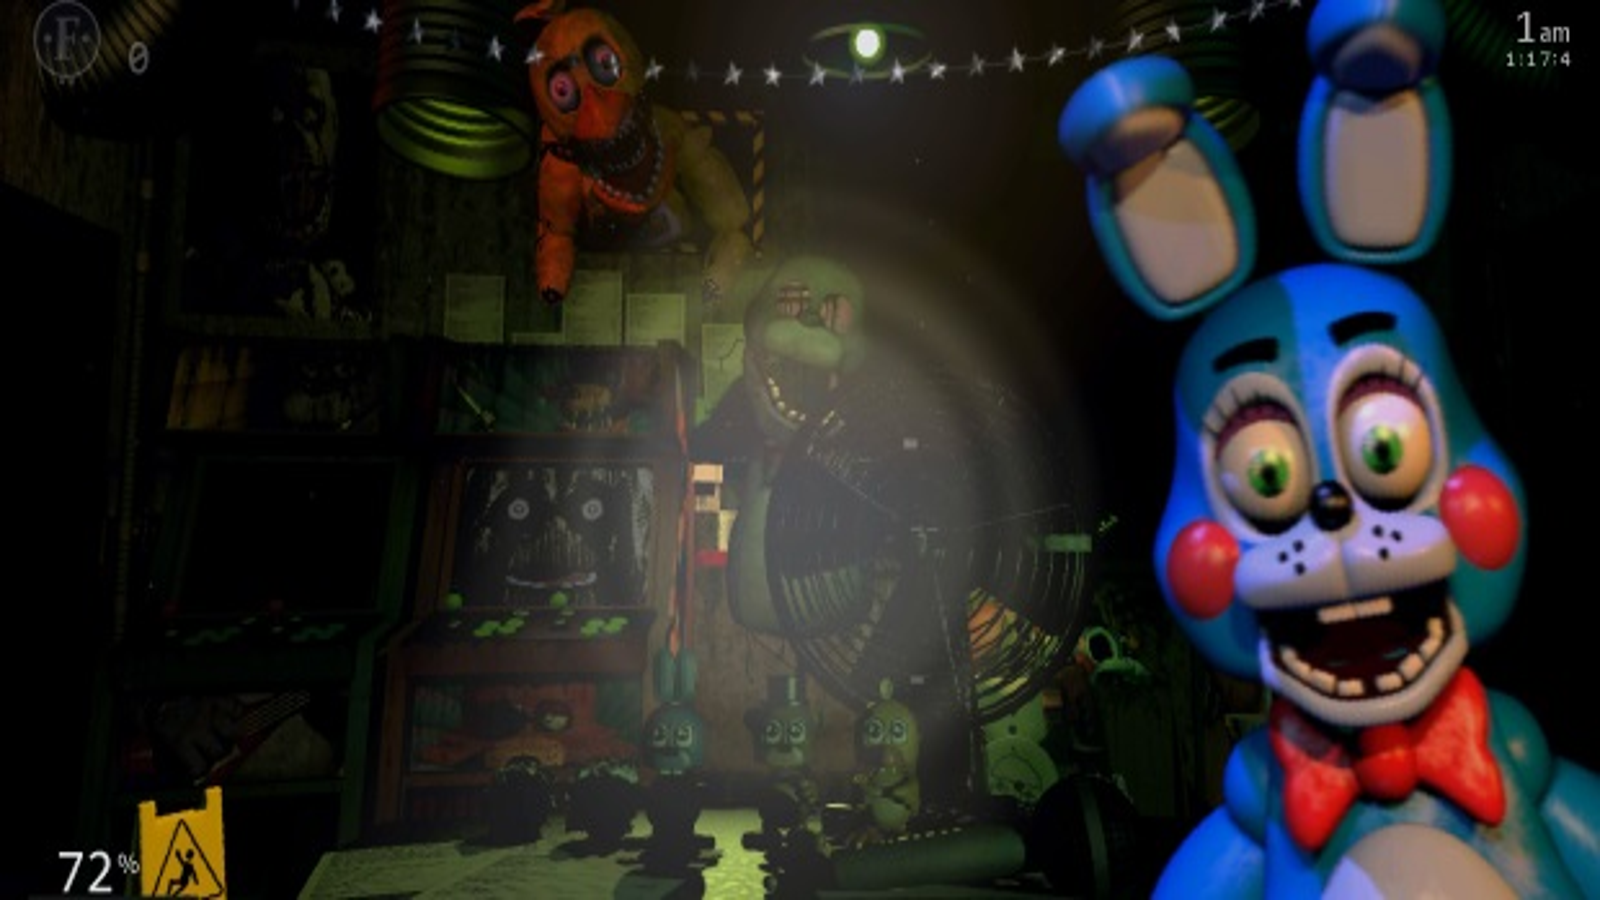 Mashup” de Five Nights at Freddy's, jogo Ultimate Custom Night é anunciado  para o Switch